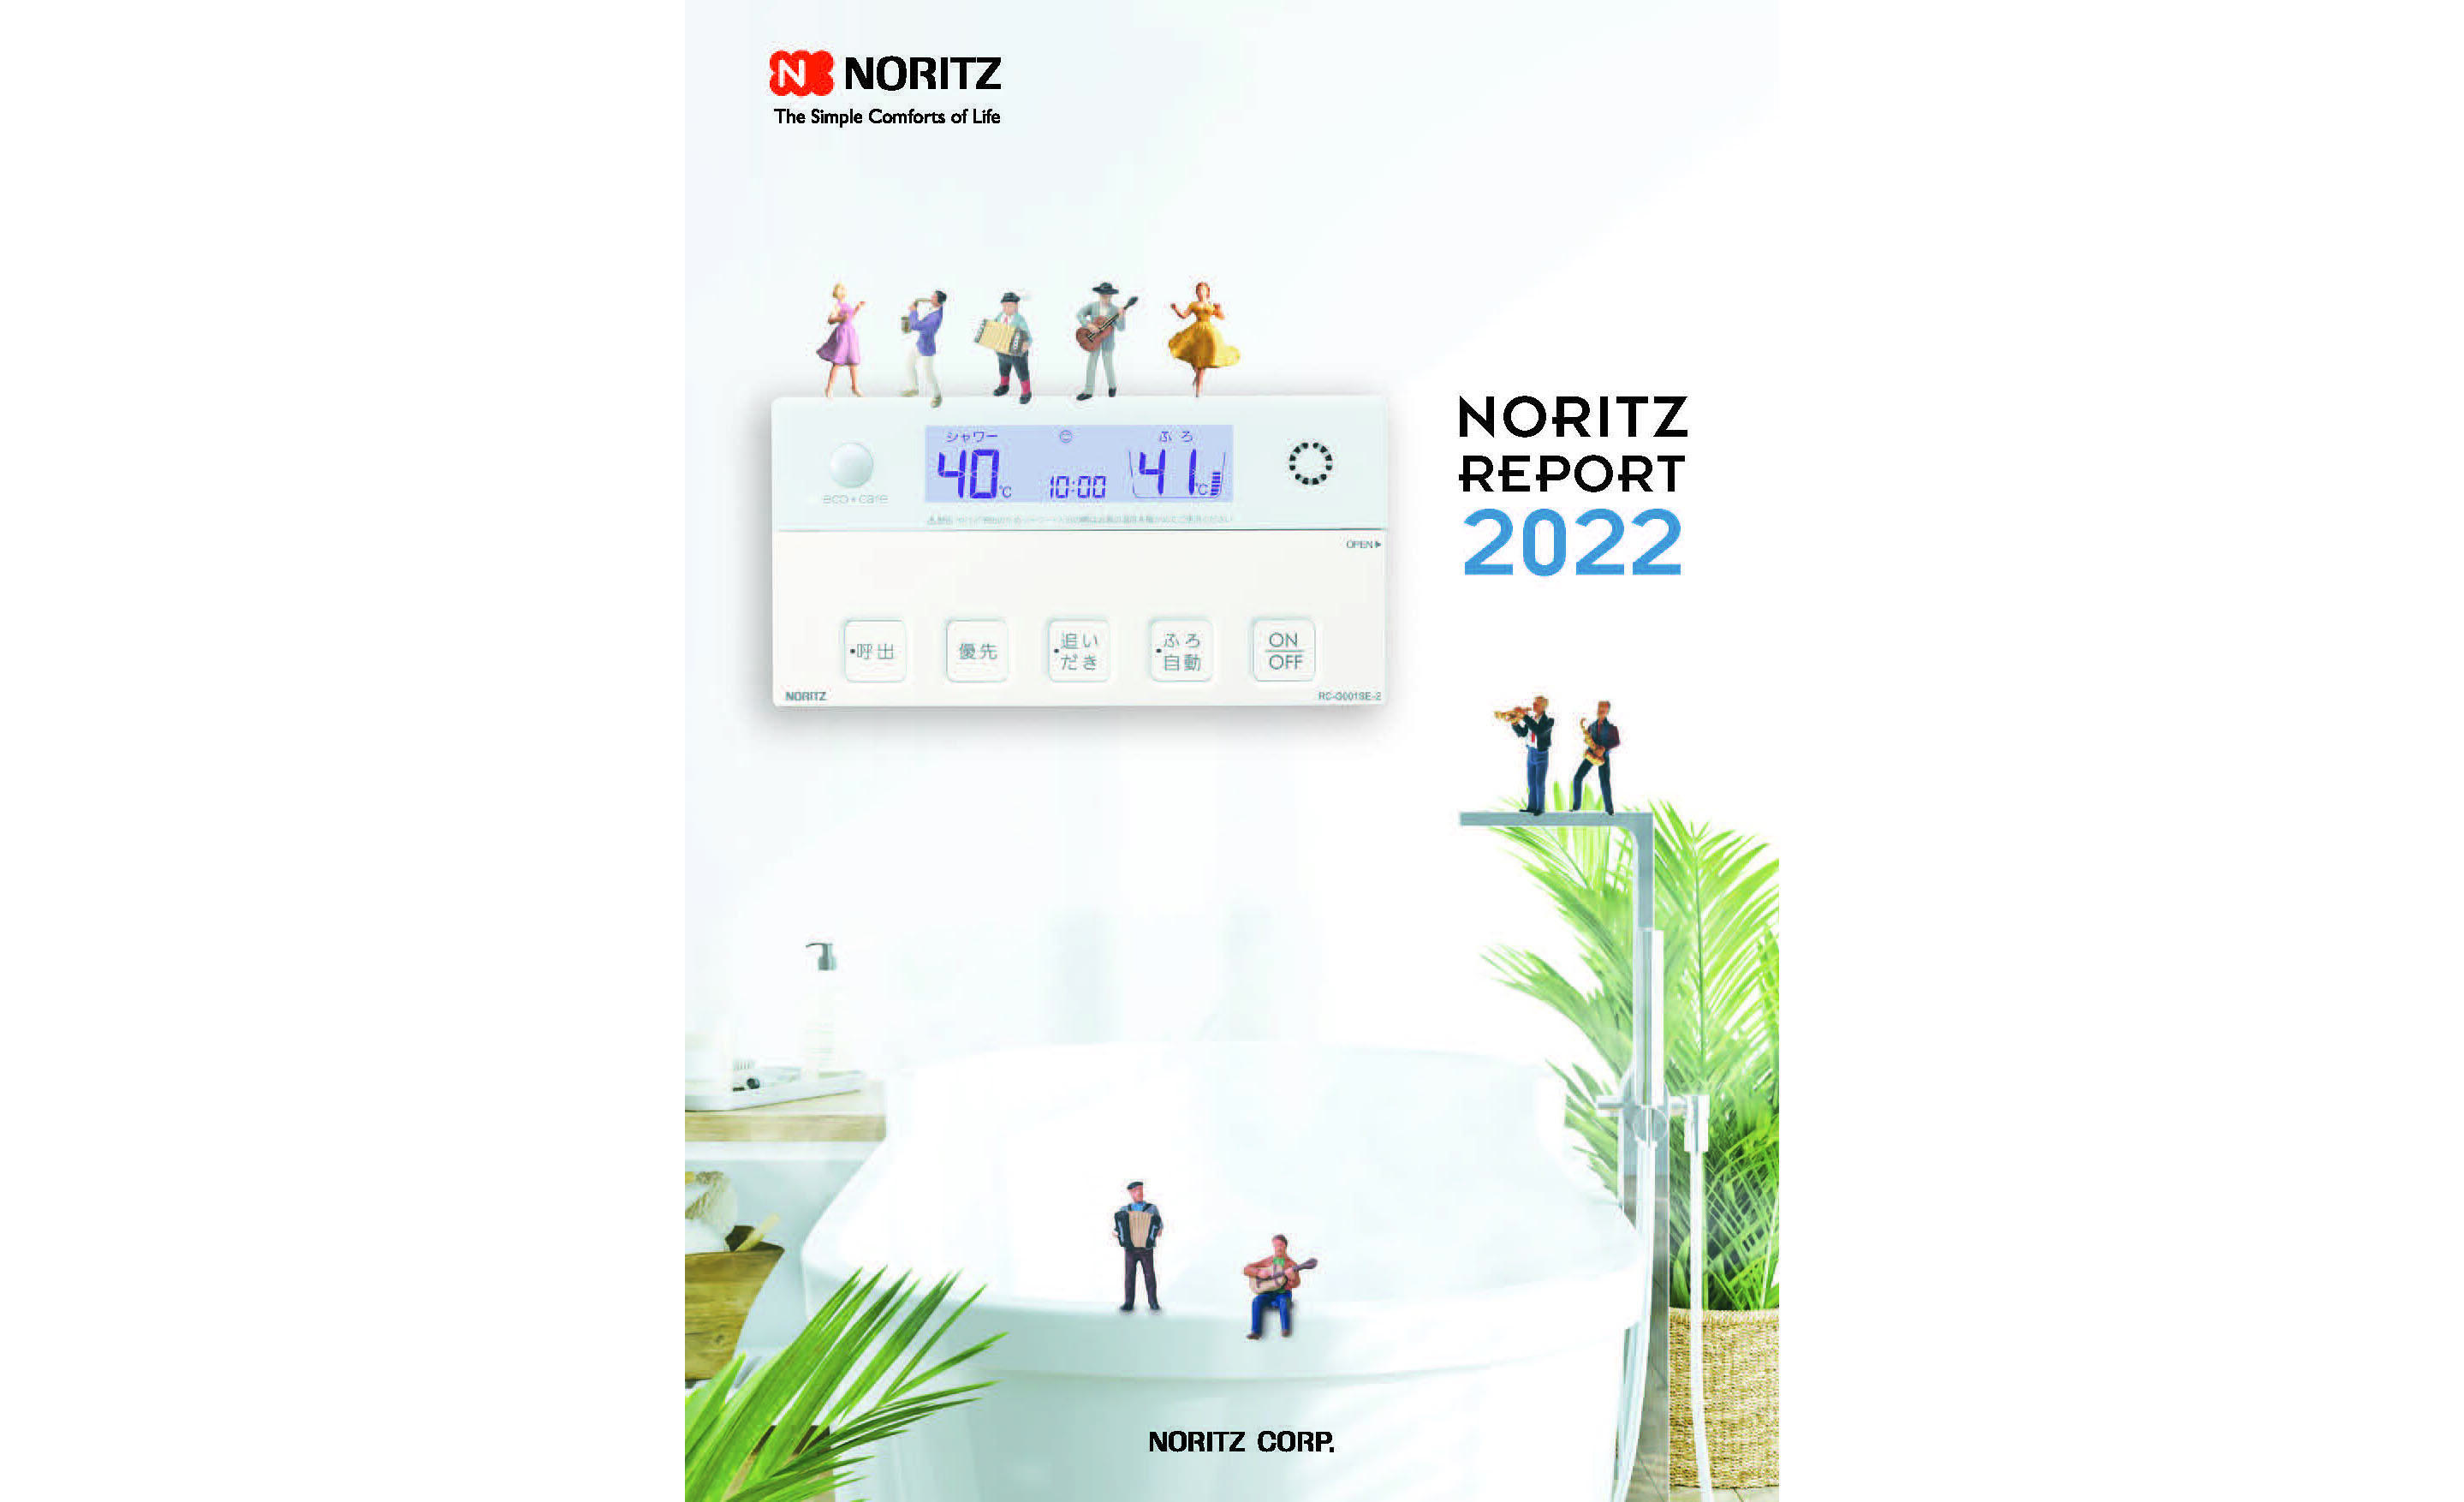 Published‟Noritz Report 2022”